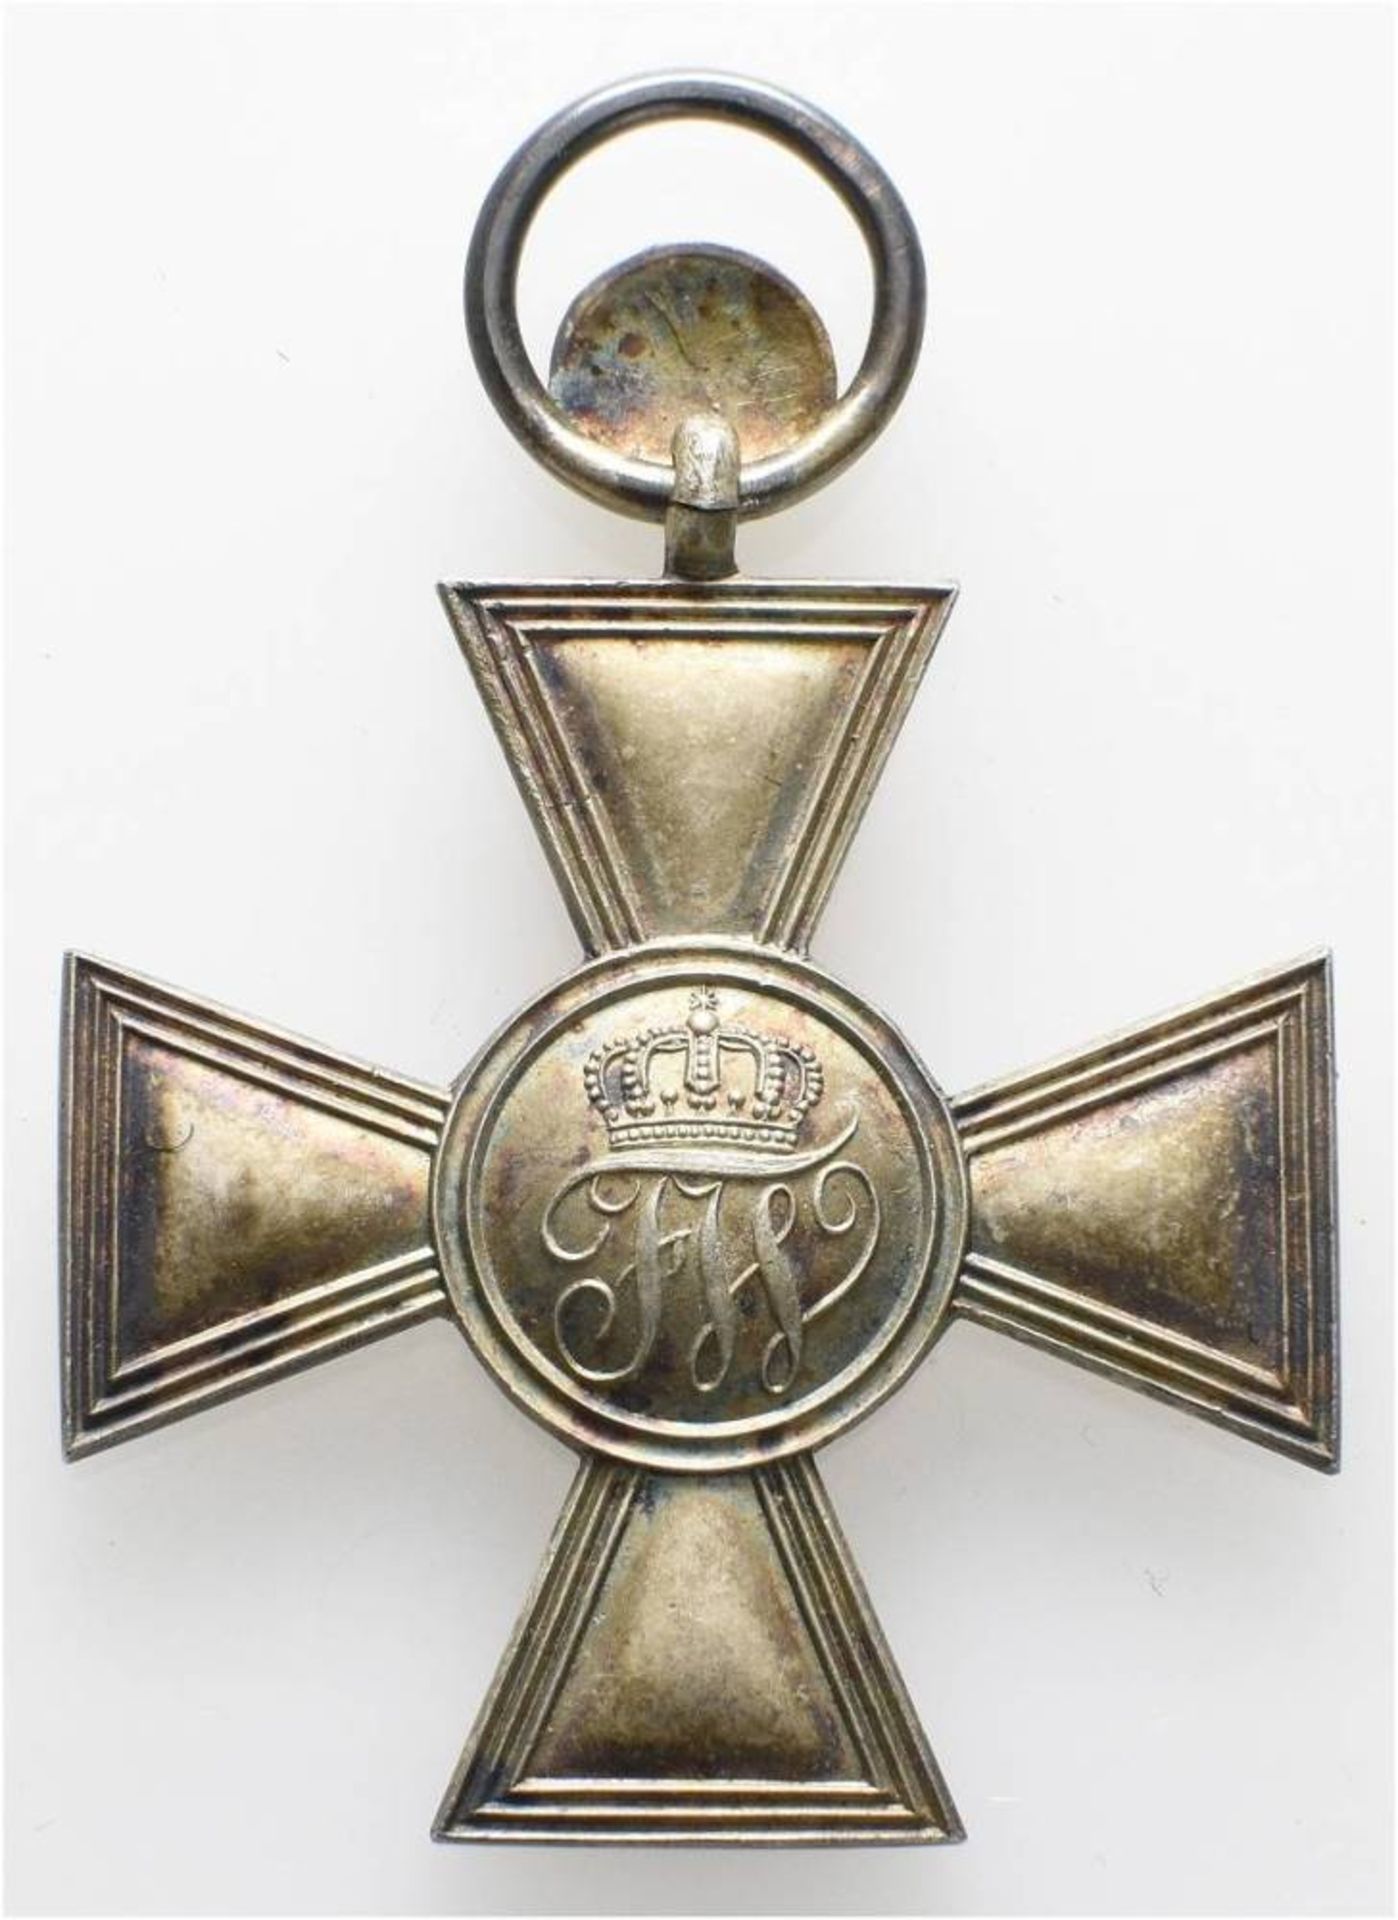 Preußen, Roter Adler Orden, Kreuz 4. Klasse, Silber, glatte Arme, mit Jubiläumszahl 50, OEK 1702, - Image 4 of 4